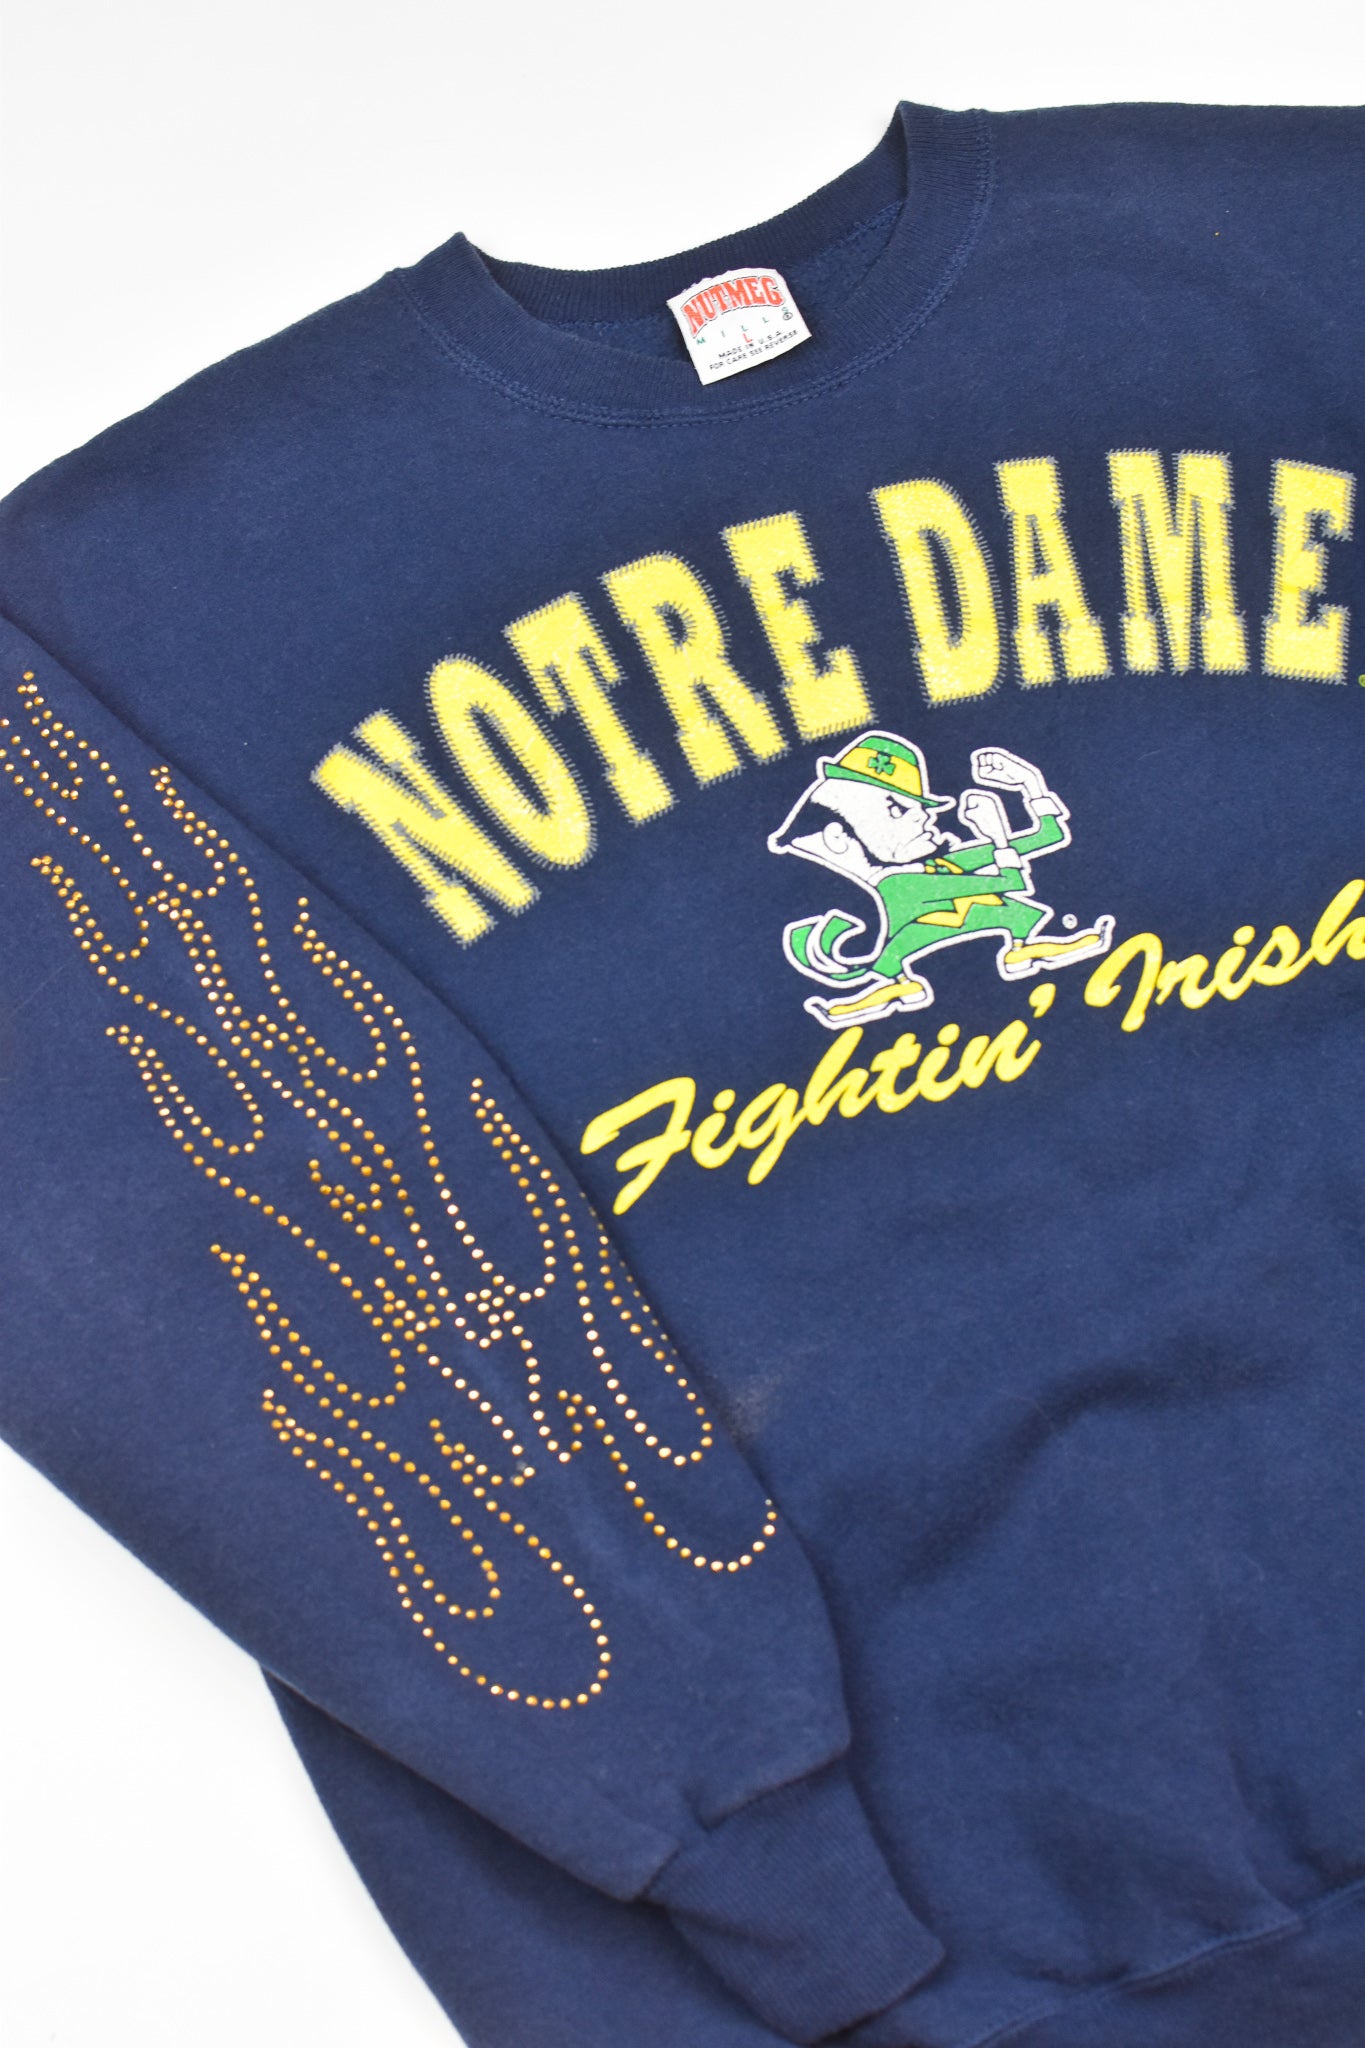 Upcycled Vintage Notre Dame Flame Sweatshirt